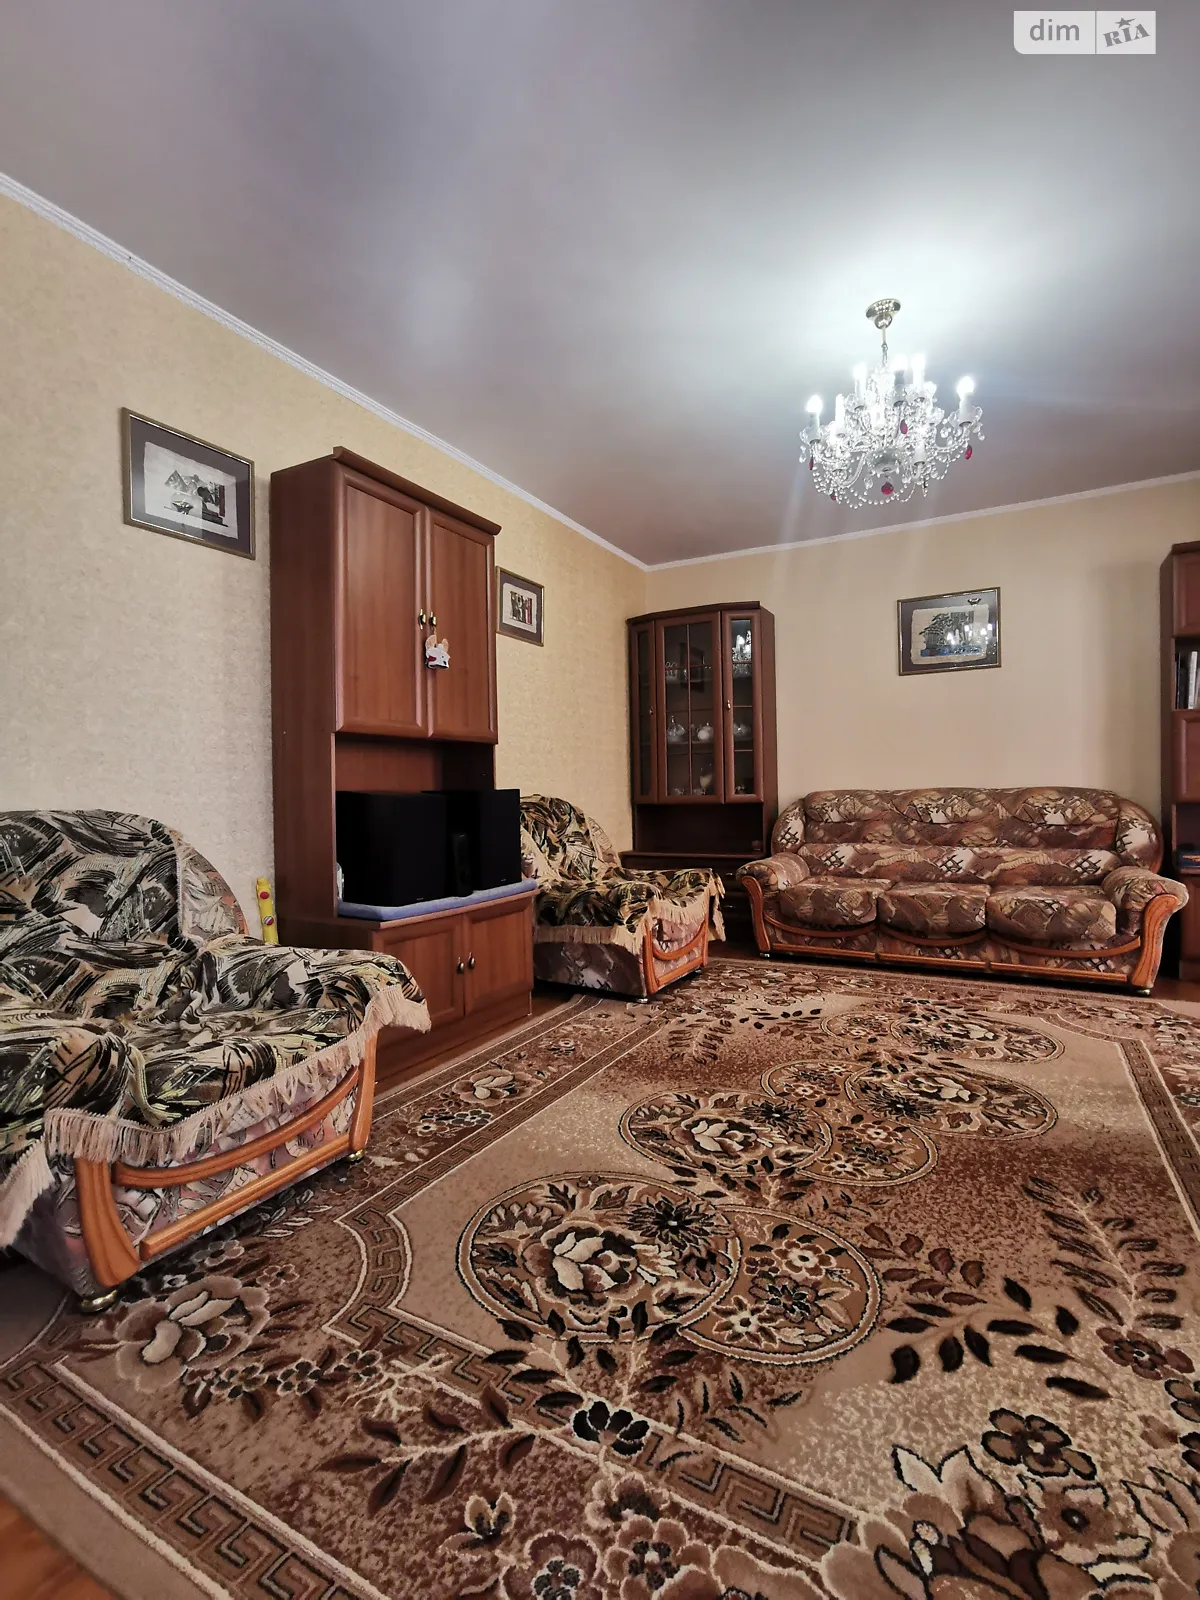 Продается 3-комнатная квартира 65 кв. м в Чернигове - фото 3